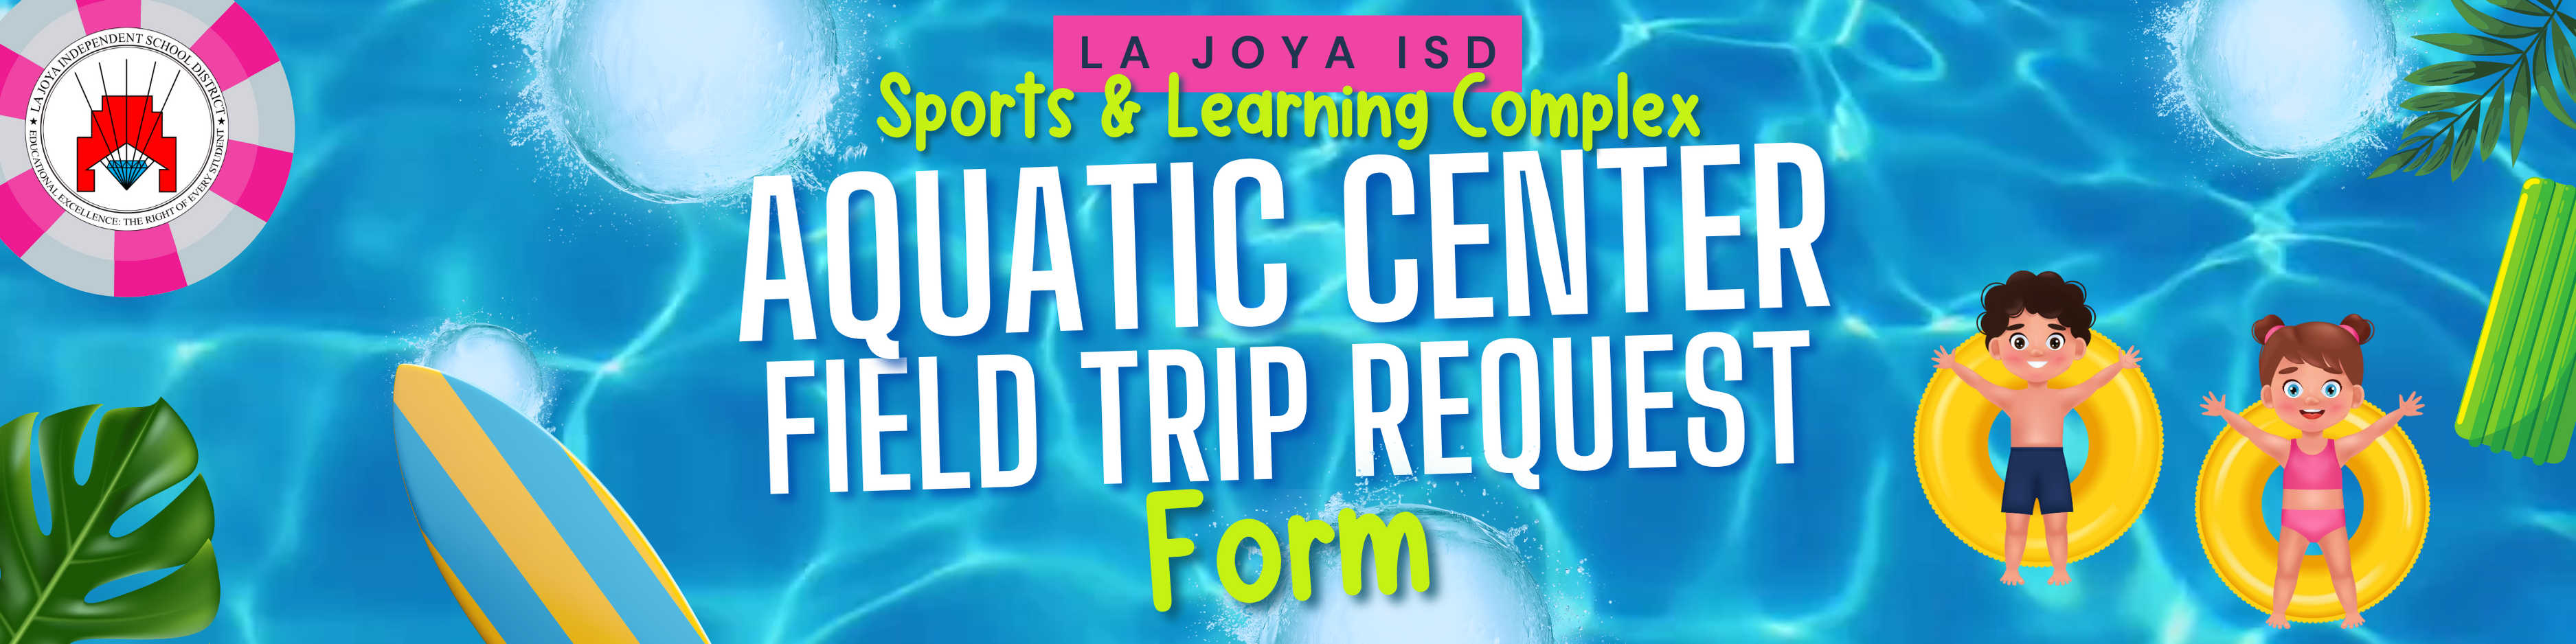 Aquatic Center Field Trip Request Form